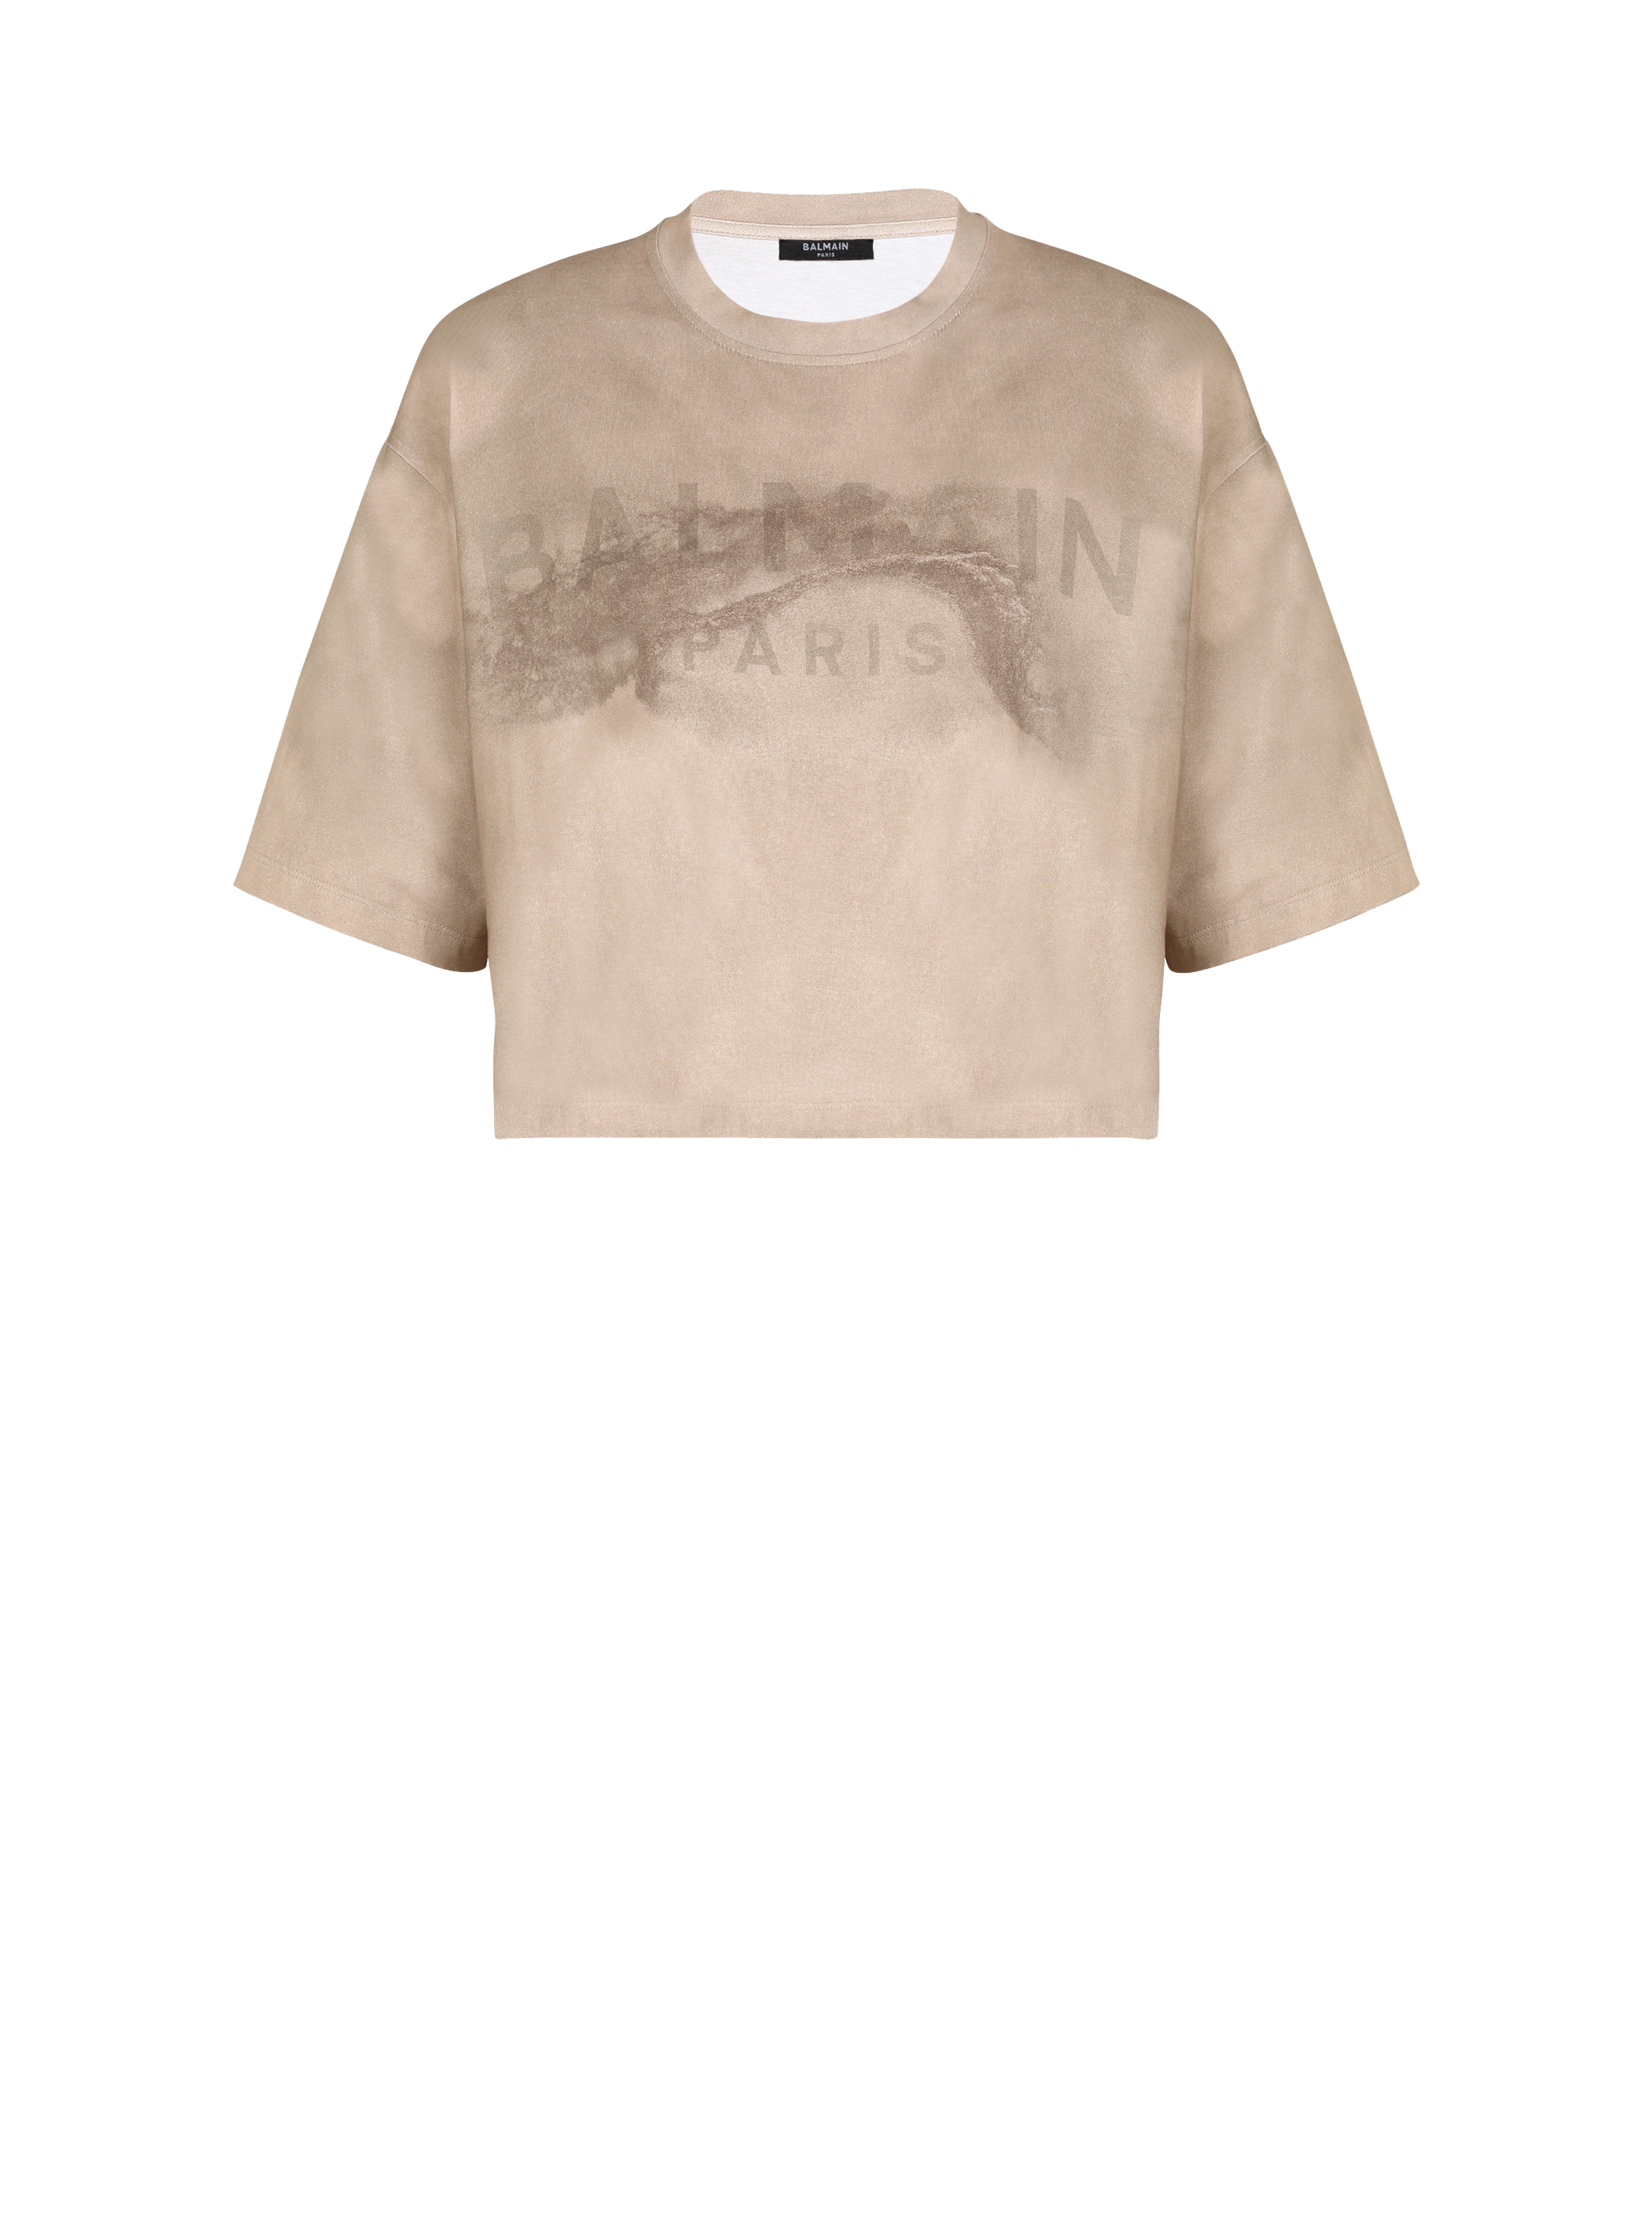 Eco-responsible cropped cotton T-shirt with Balmain logo print, beige